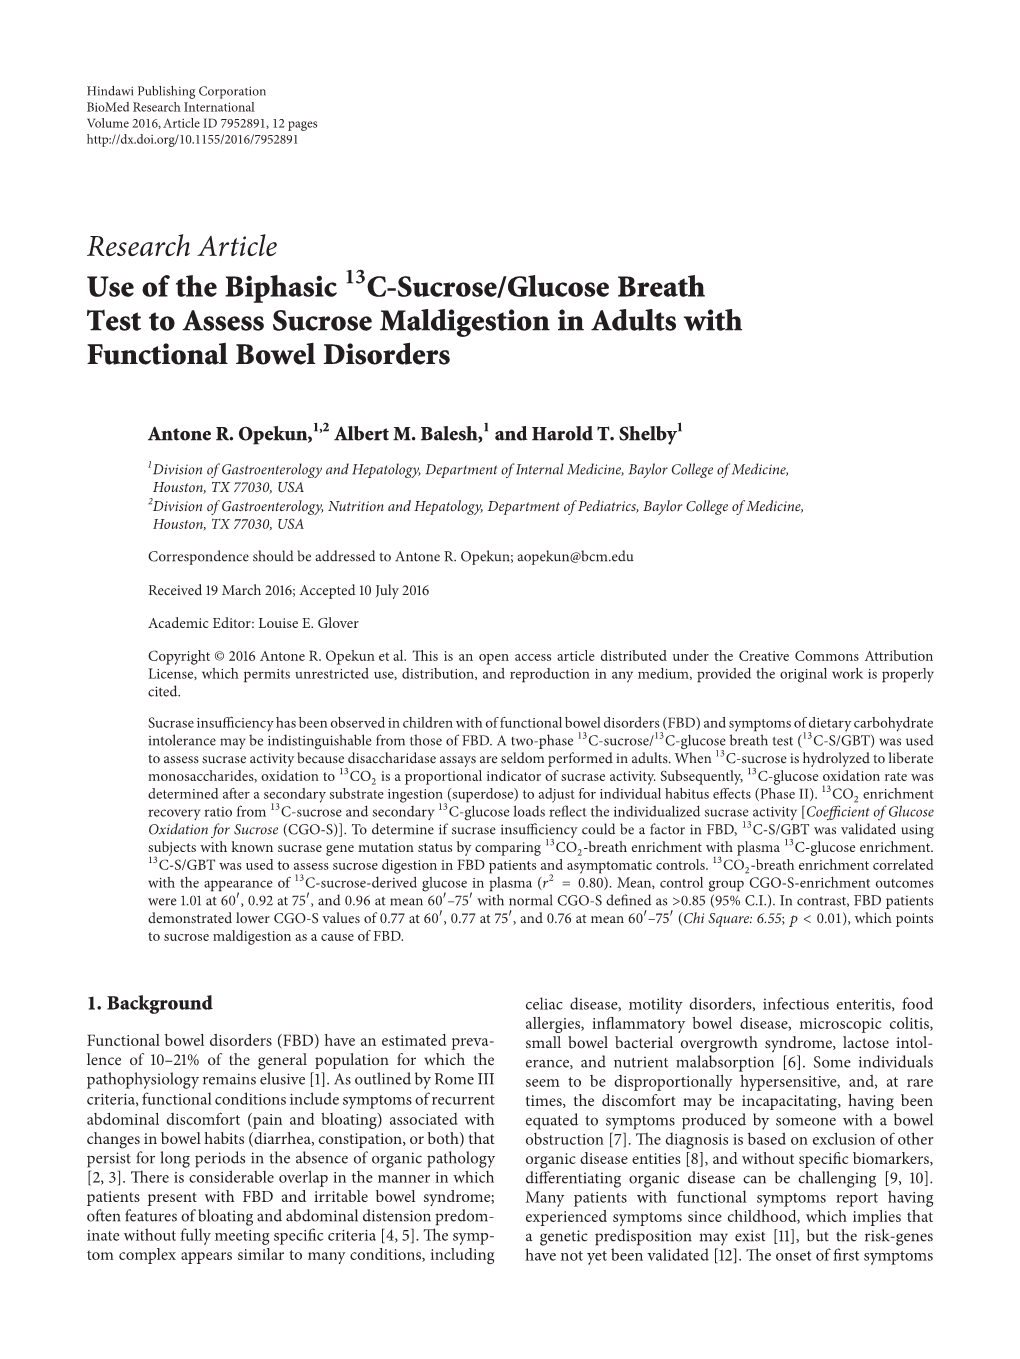 Use of the Biphasic 13 C-Sucrose/Glucose Breath Test To